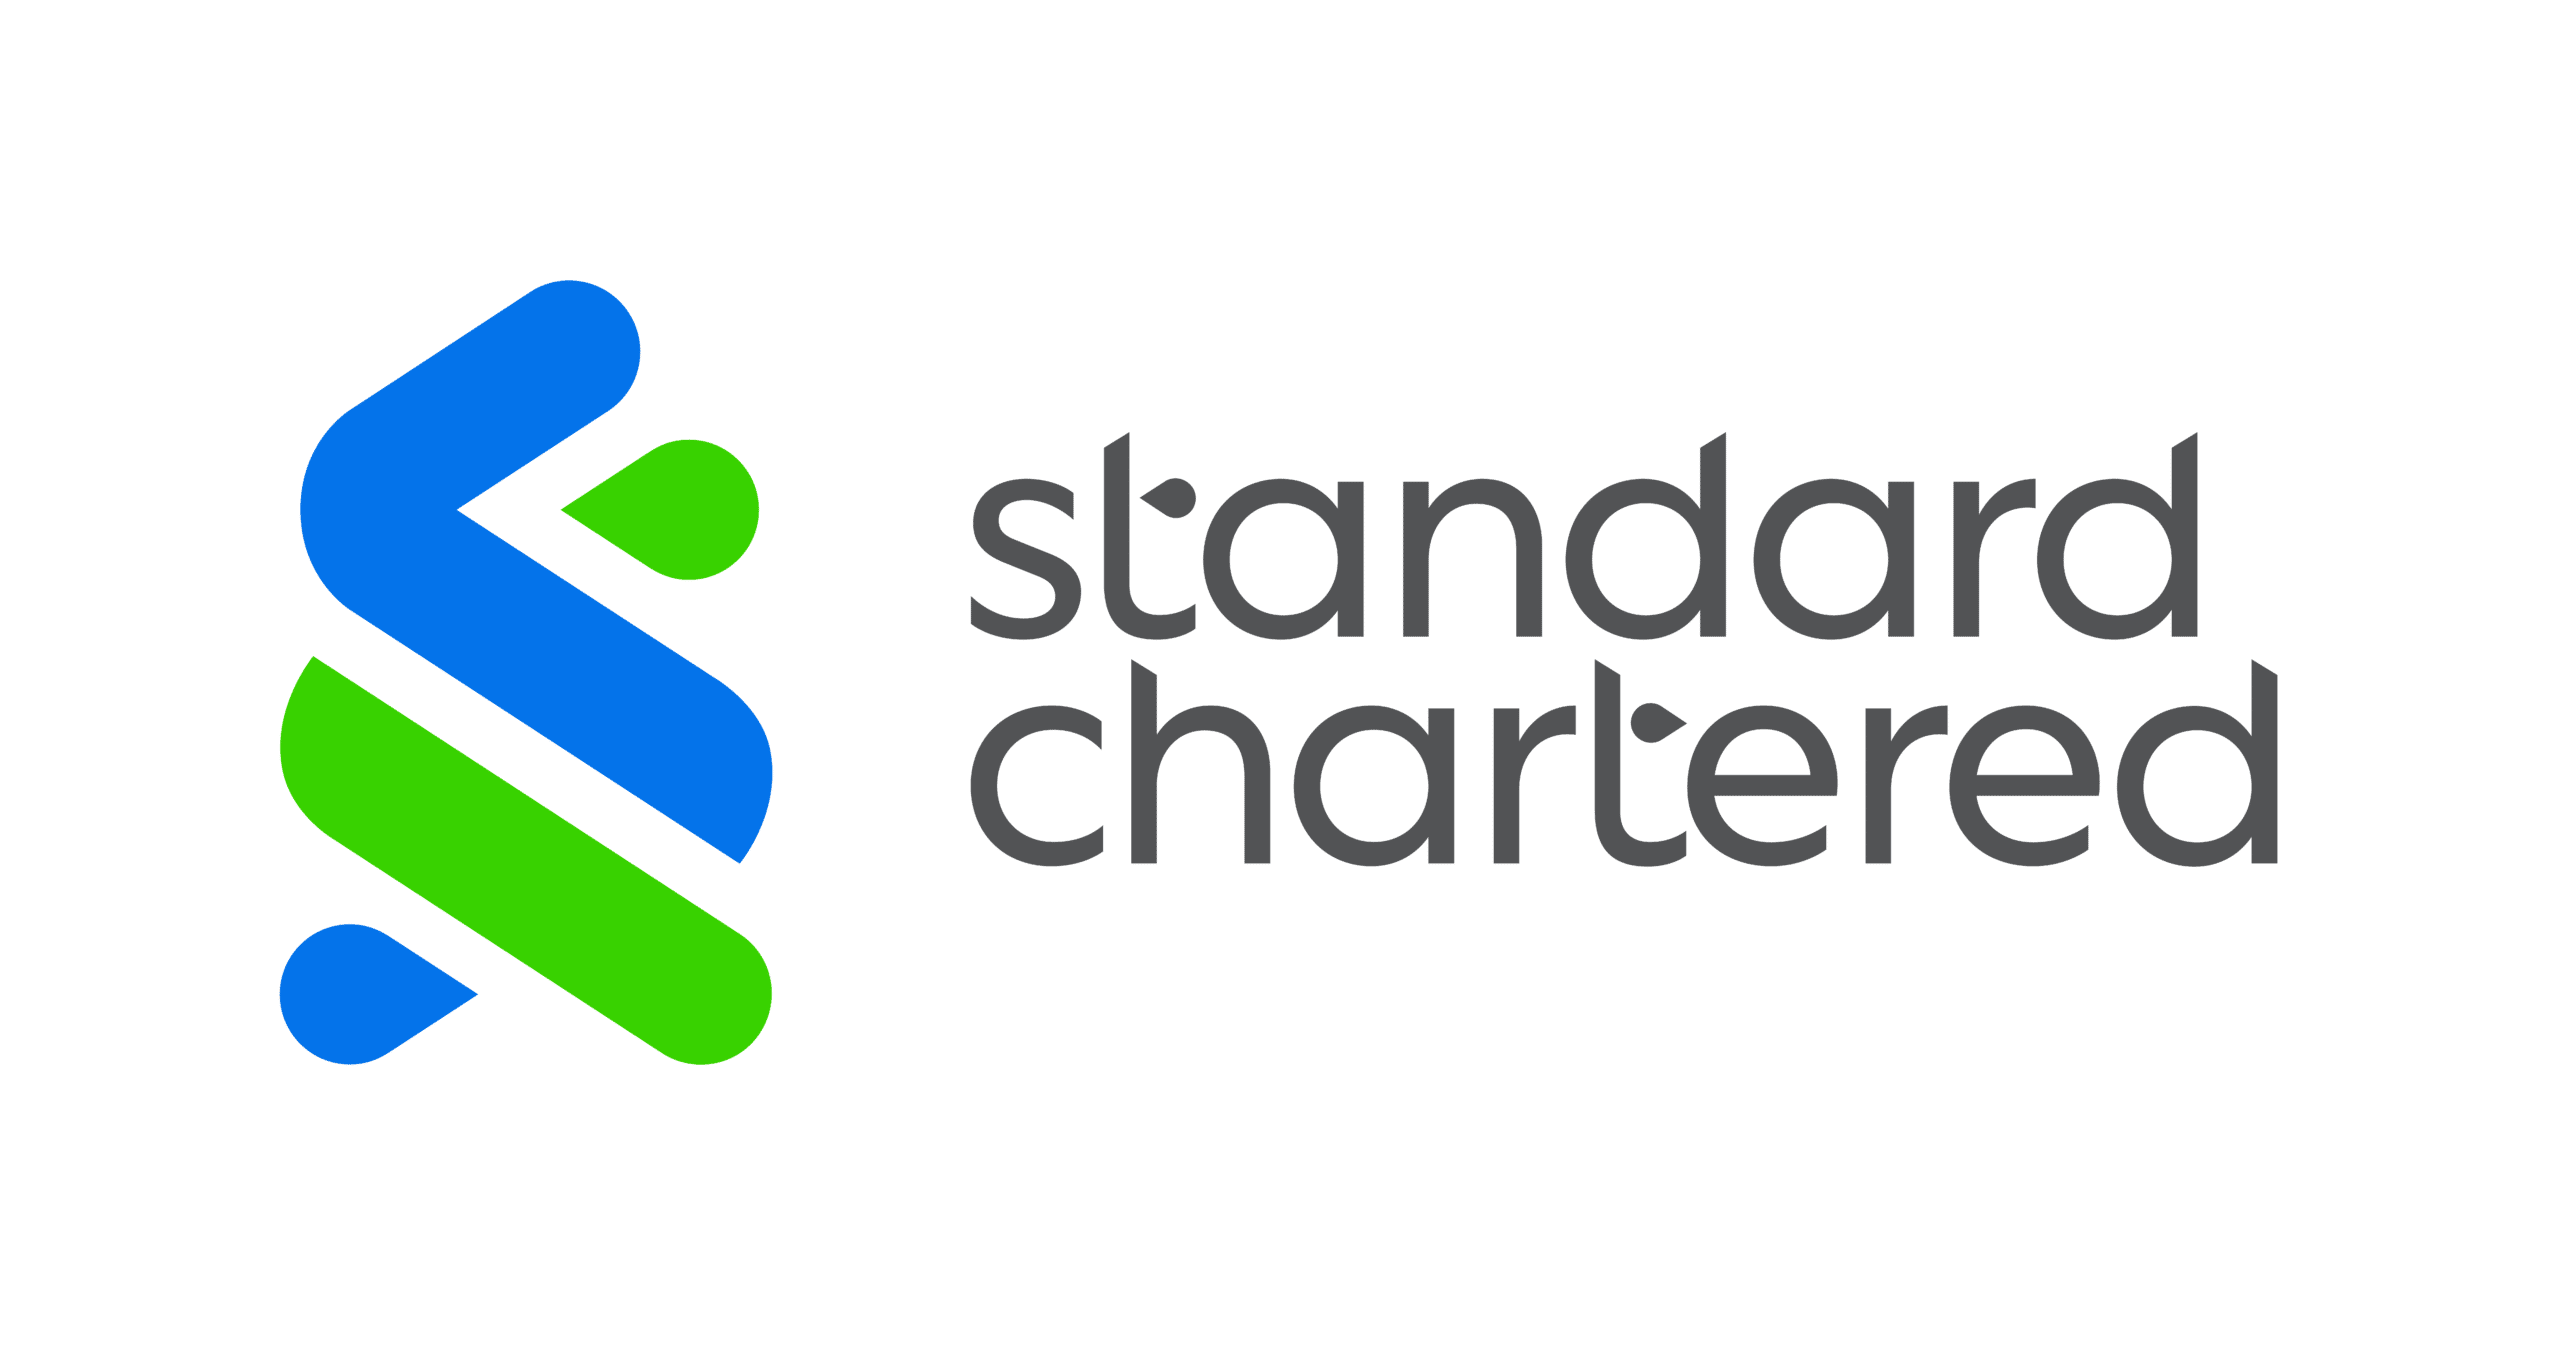 Standard Chartered Bank Americas logo